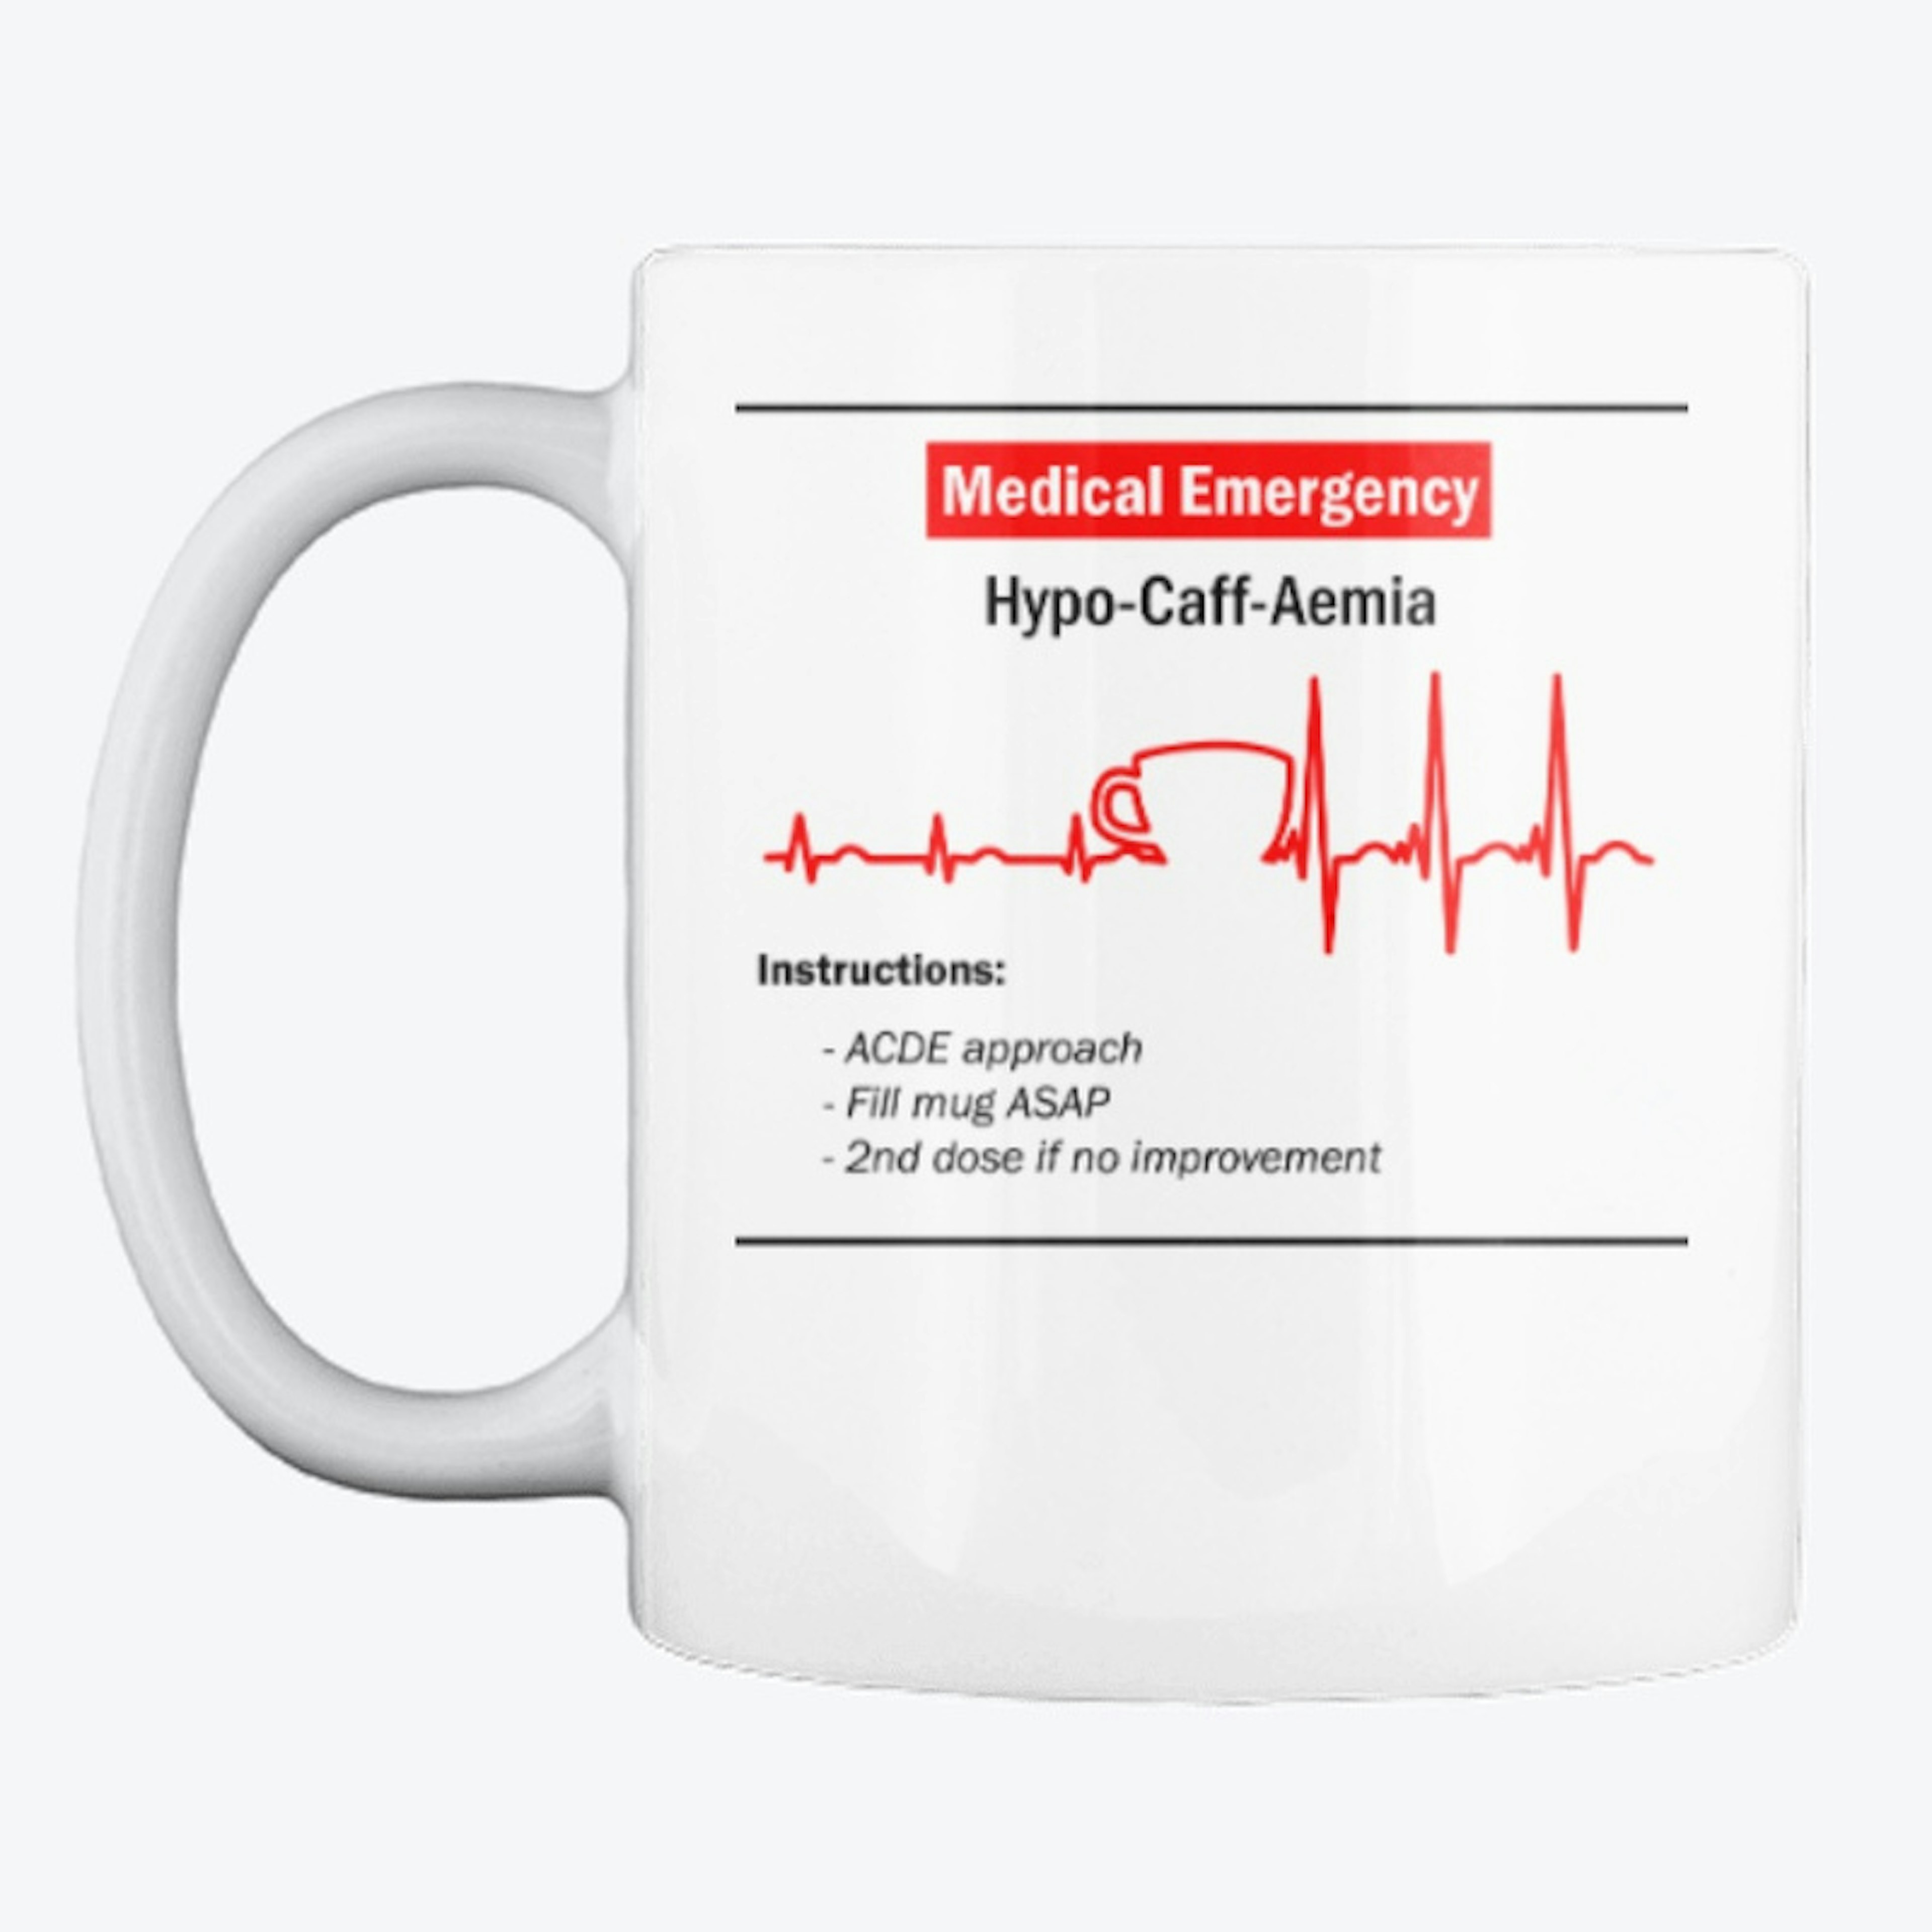 Hypo-Caff-Aemia